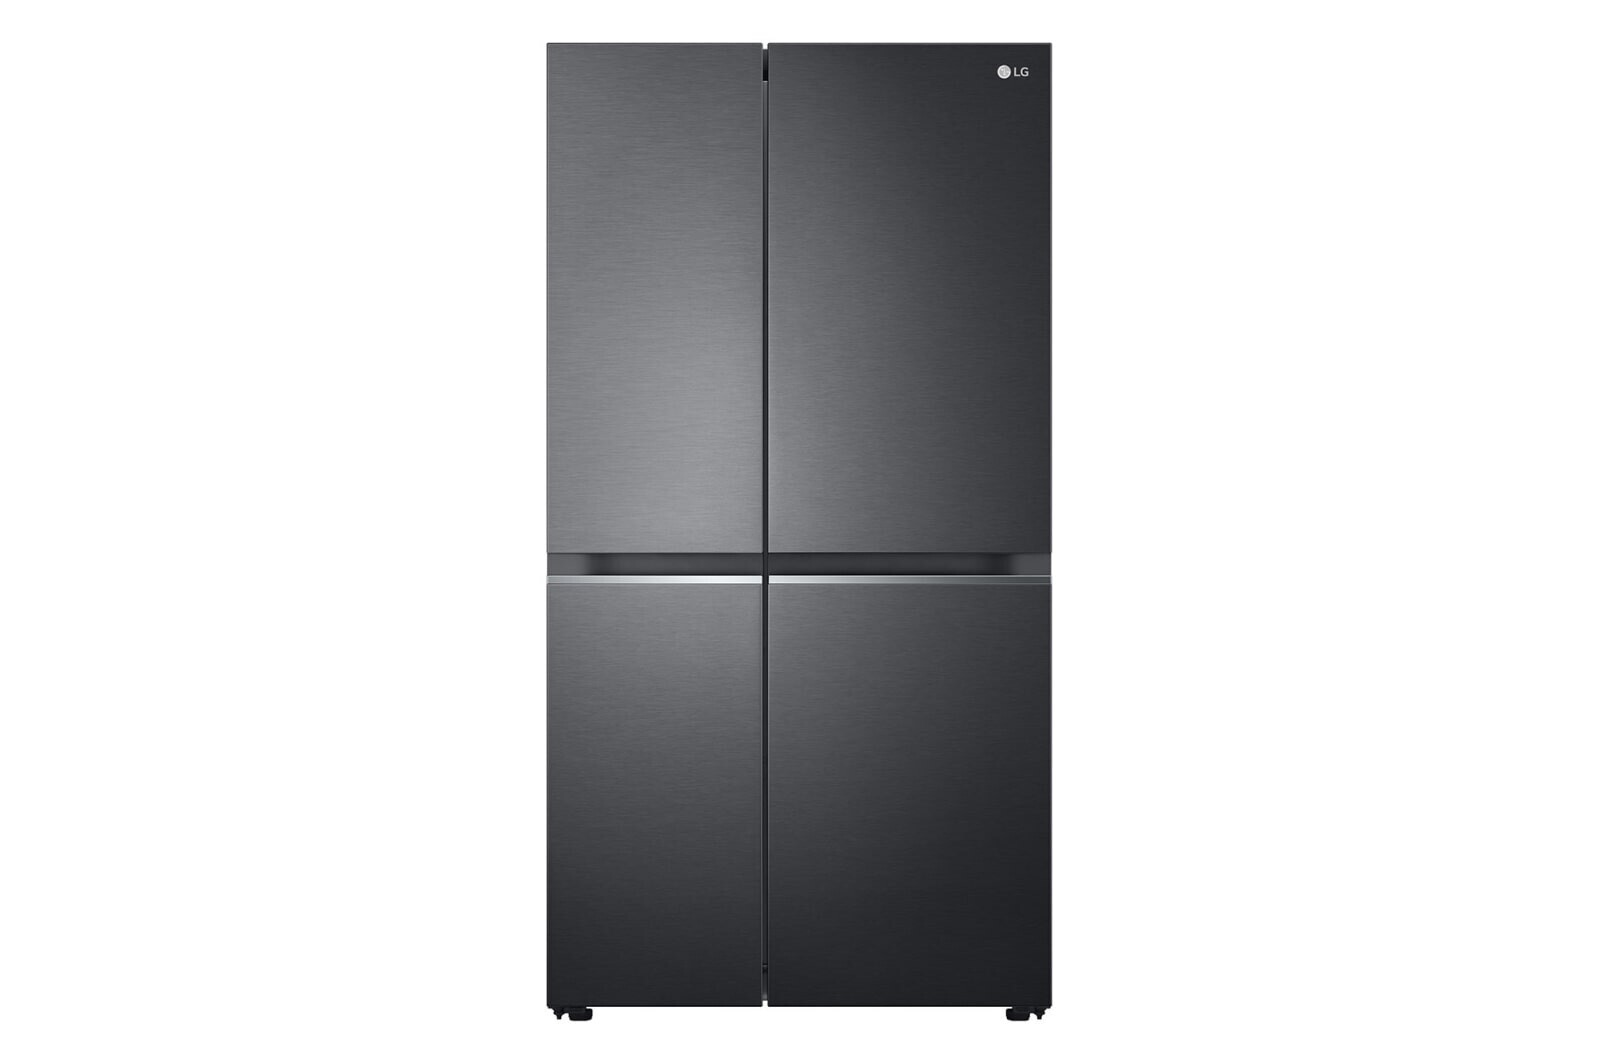 Lg gc b257jeyv. LG GC-b257sezv. Холодильник Side by Side LG GC-q257cbfc черный. Медея холодильник Сайд бай Сайд черный.